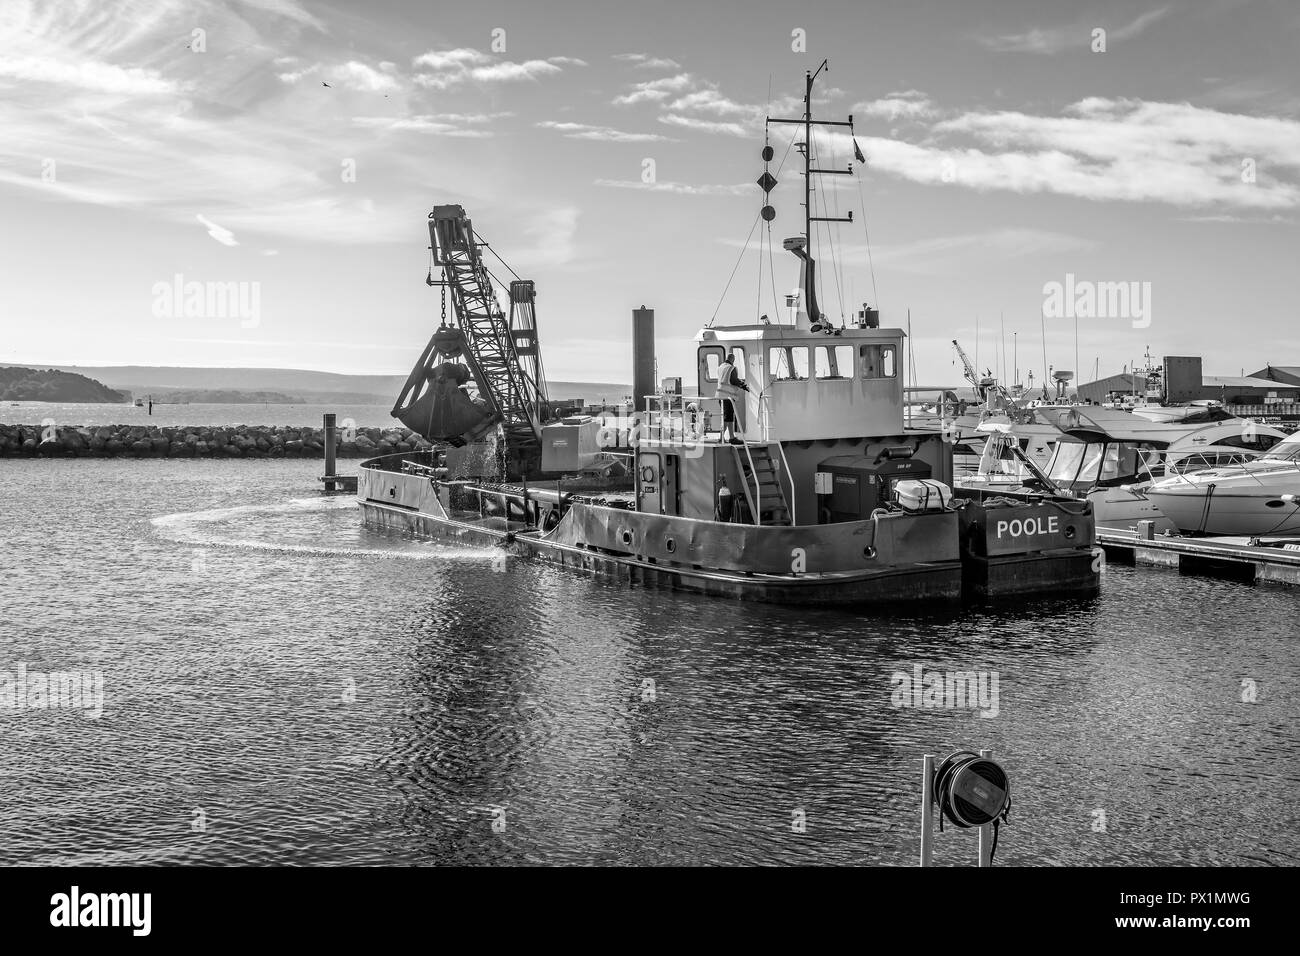 Grab Dredger C H Horn at work dredging Poole Harbour marina in Dorset, UK on 18 October 2018 Stock Photo